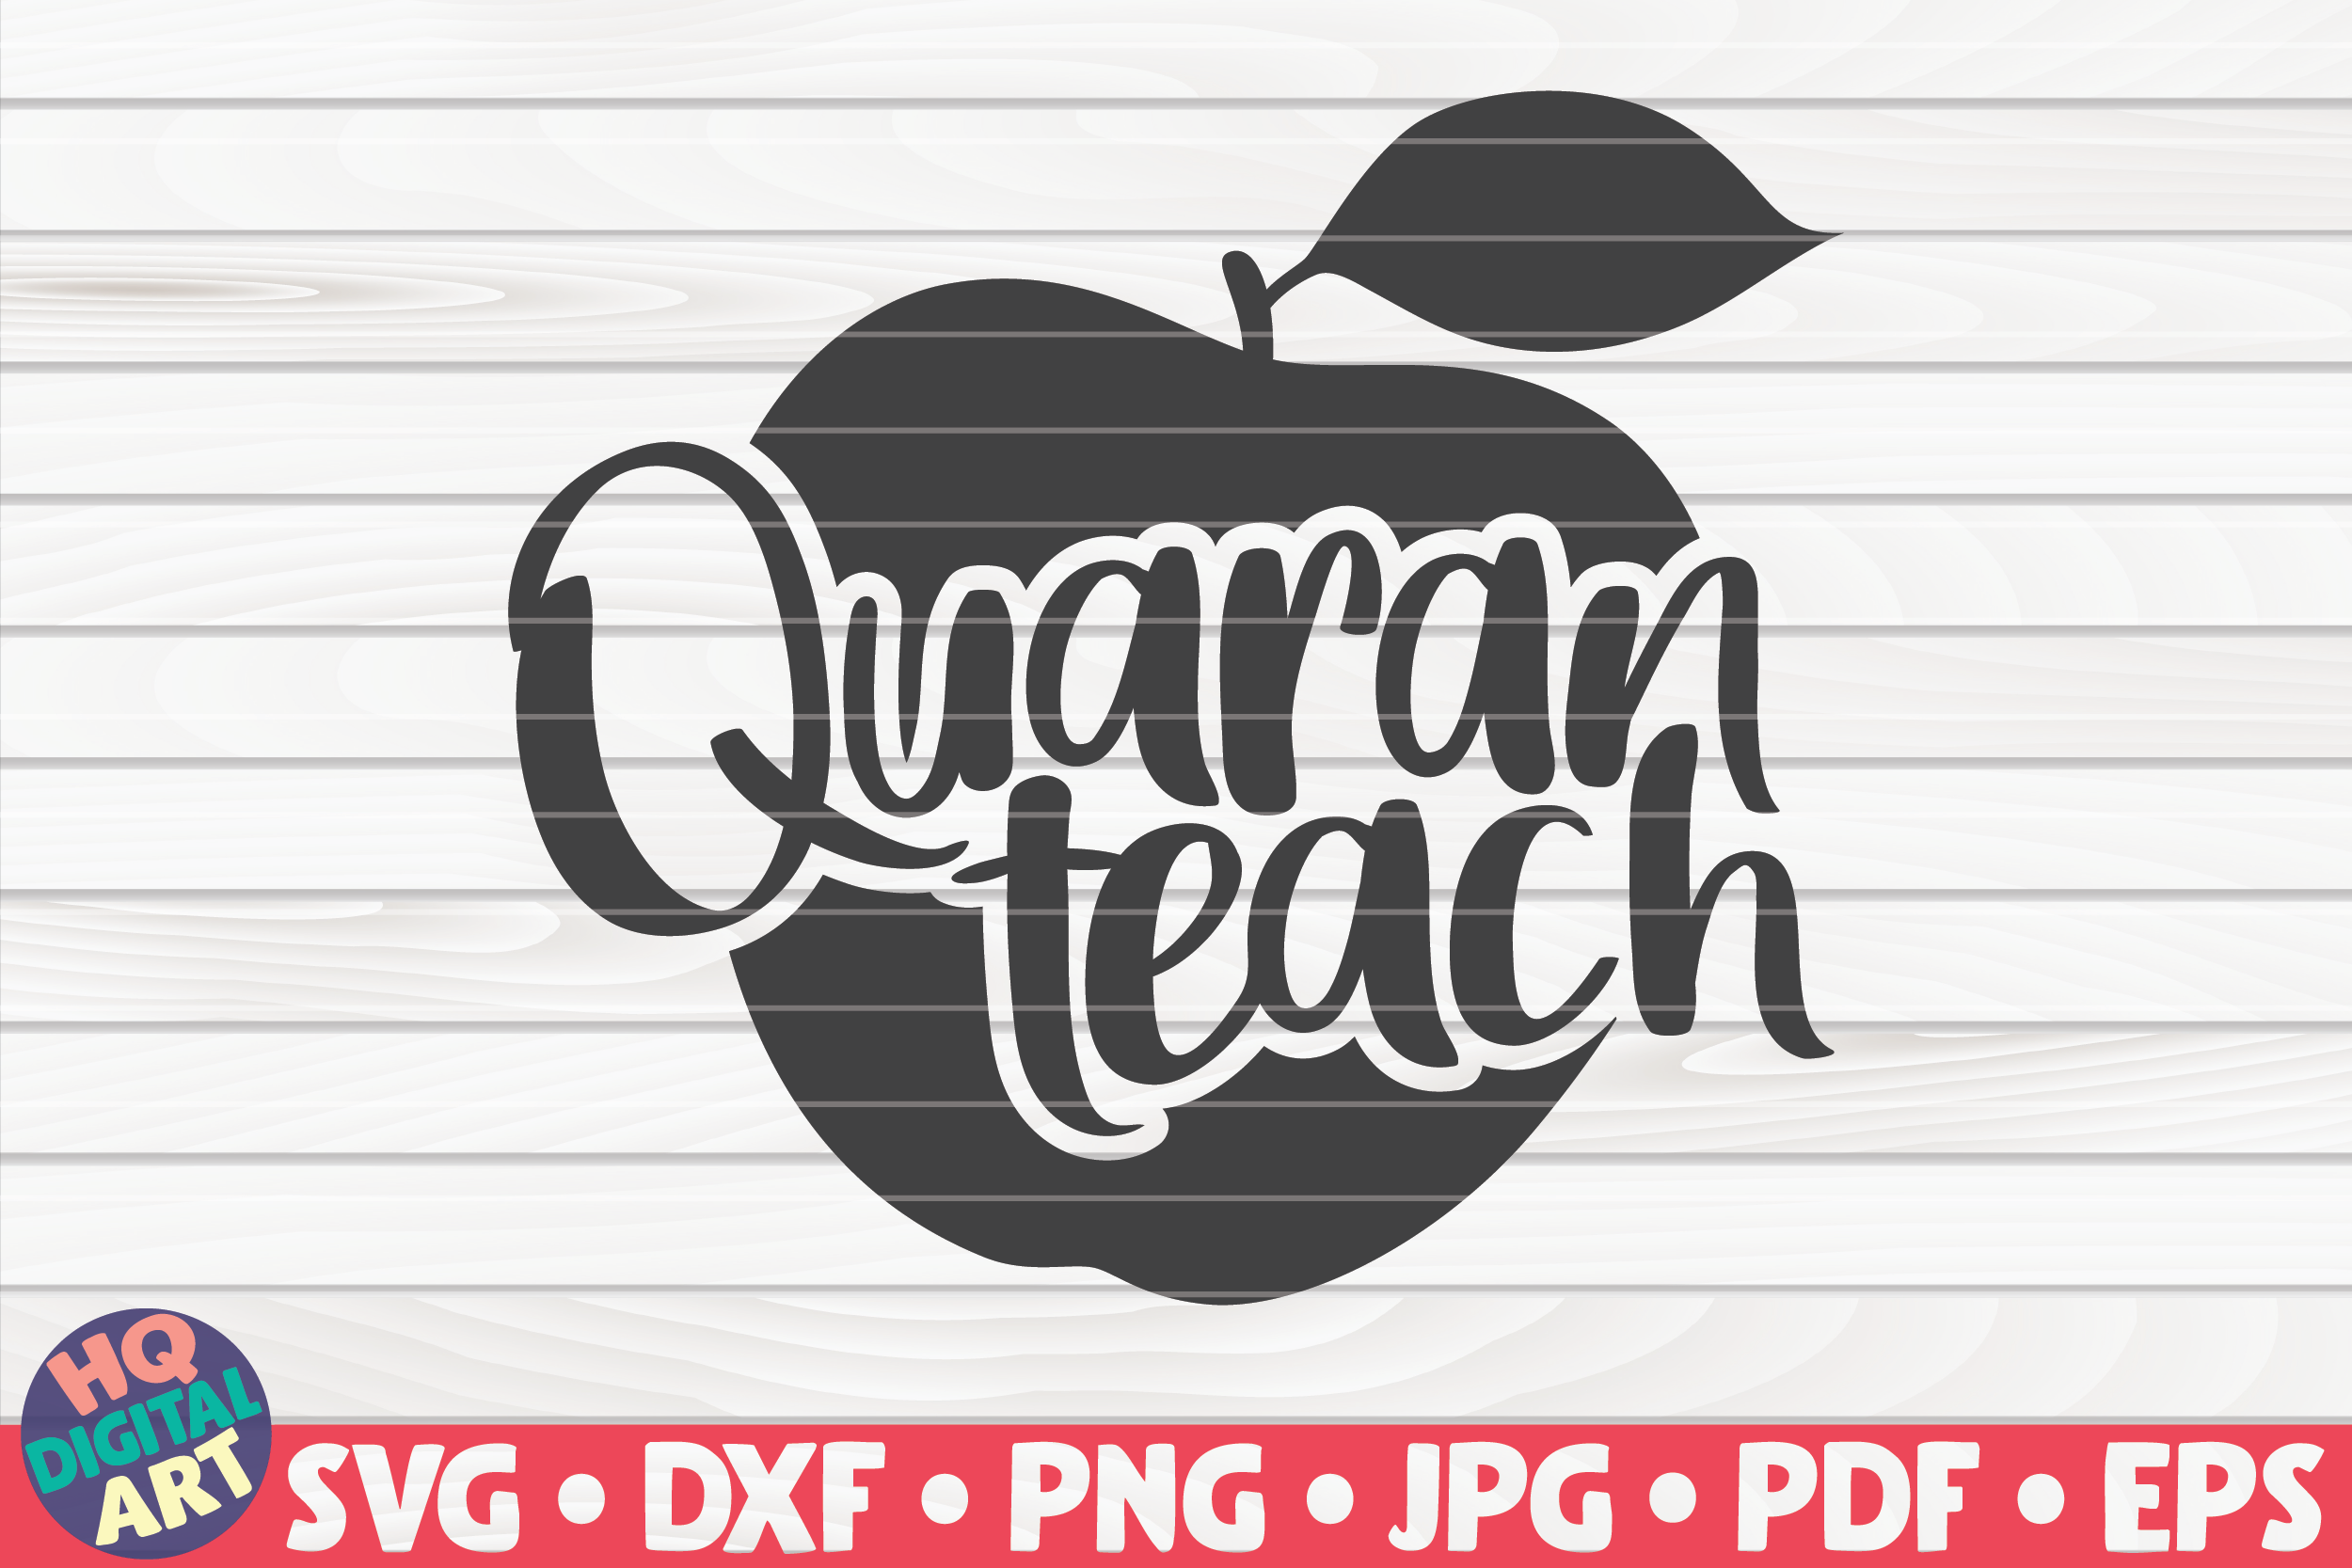 Download Quaranteach Svg Teacher Quarantine Quote By Hqdigitalart Thehungryjpeg Com